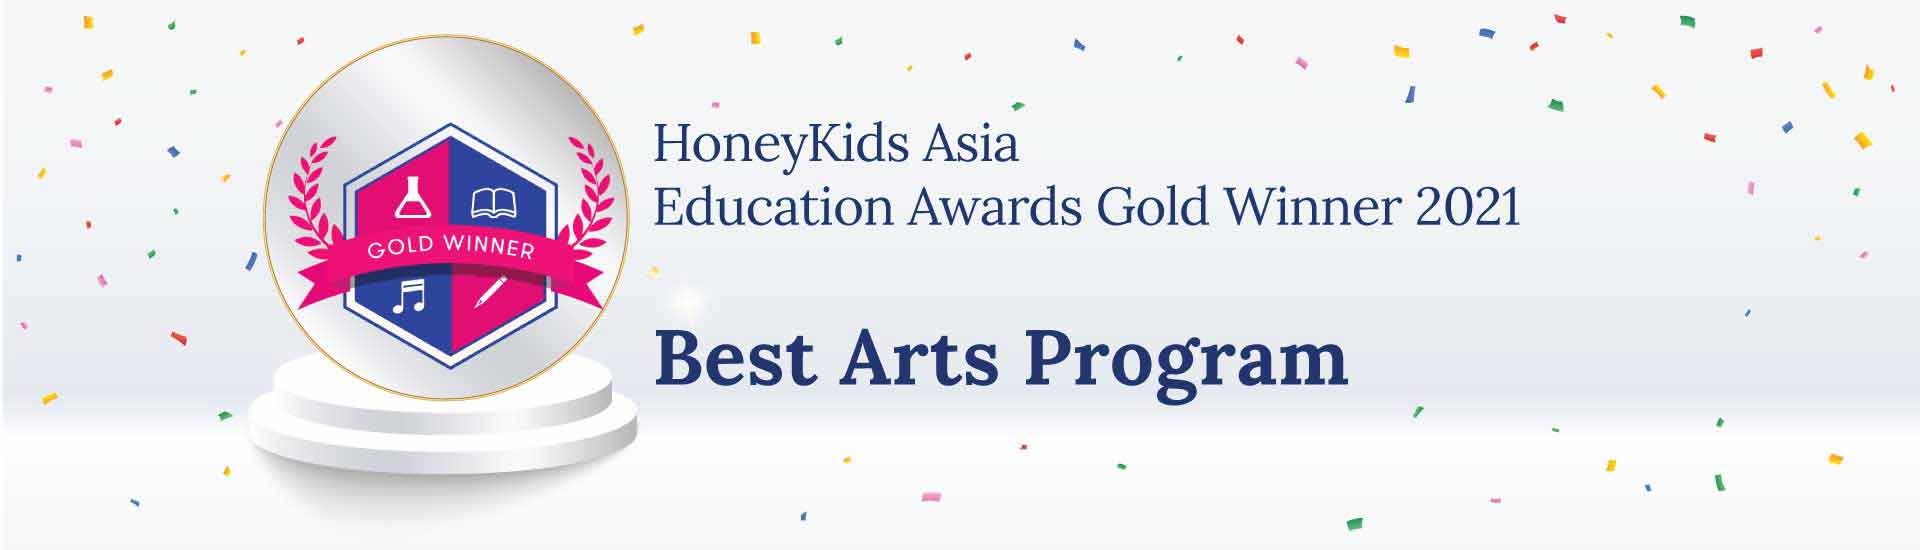 Chatsworth International School is a 2021 Education Awards Gold Winner for Best Arts Program by HoneyKids Asia